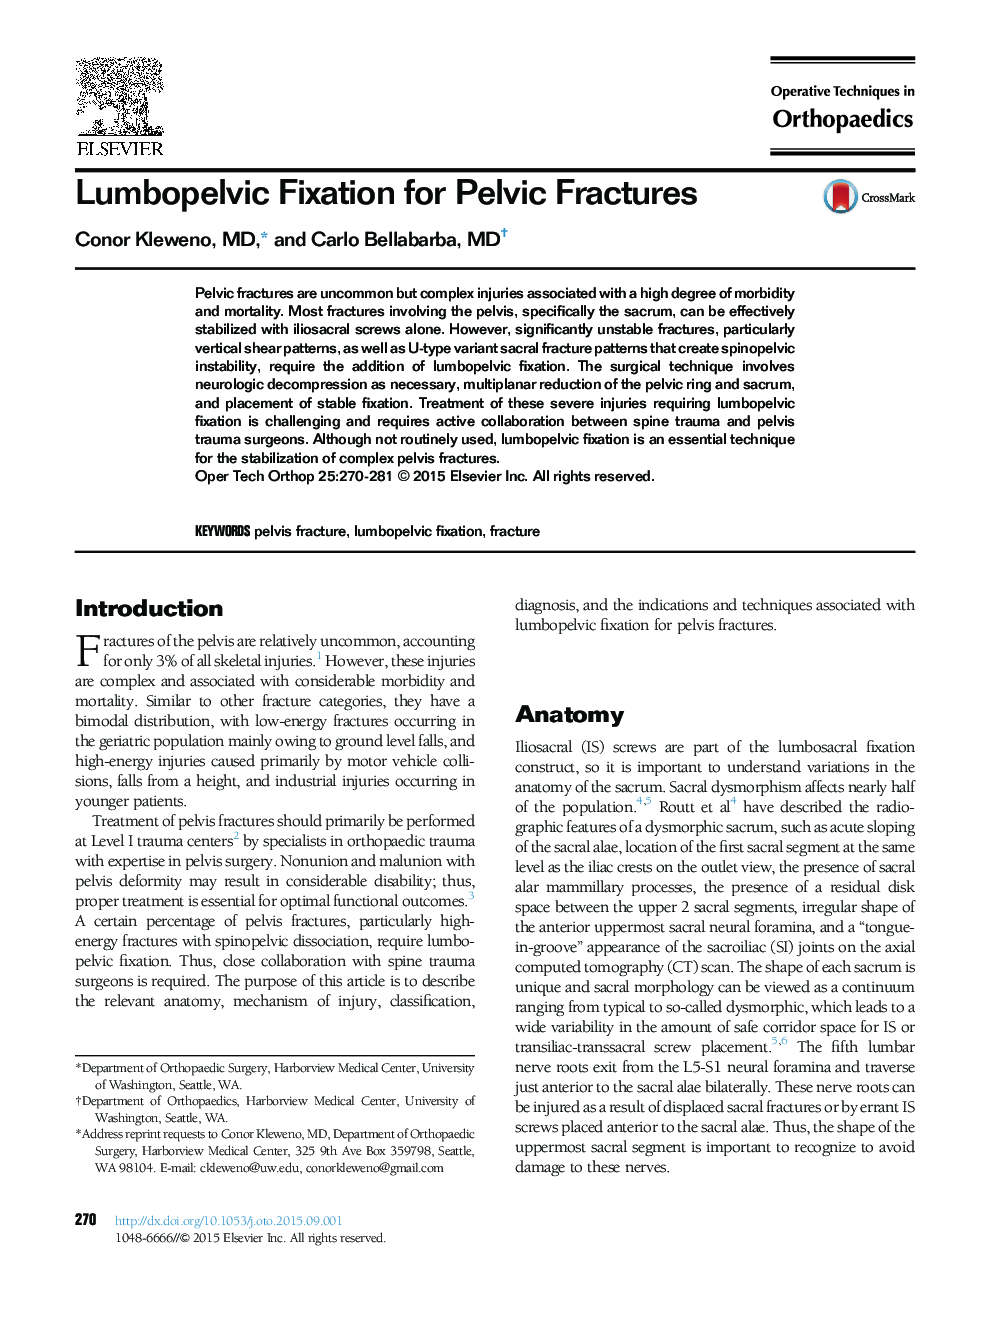 Lumbopelvic Fixation for Pelvic Fractures